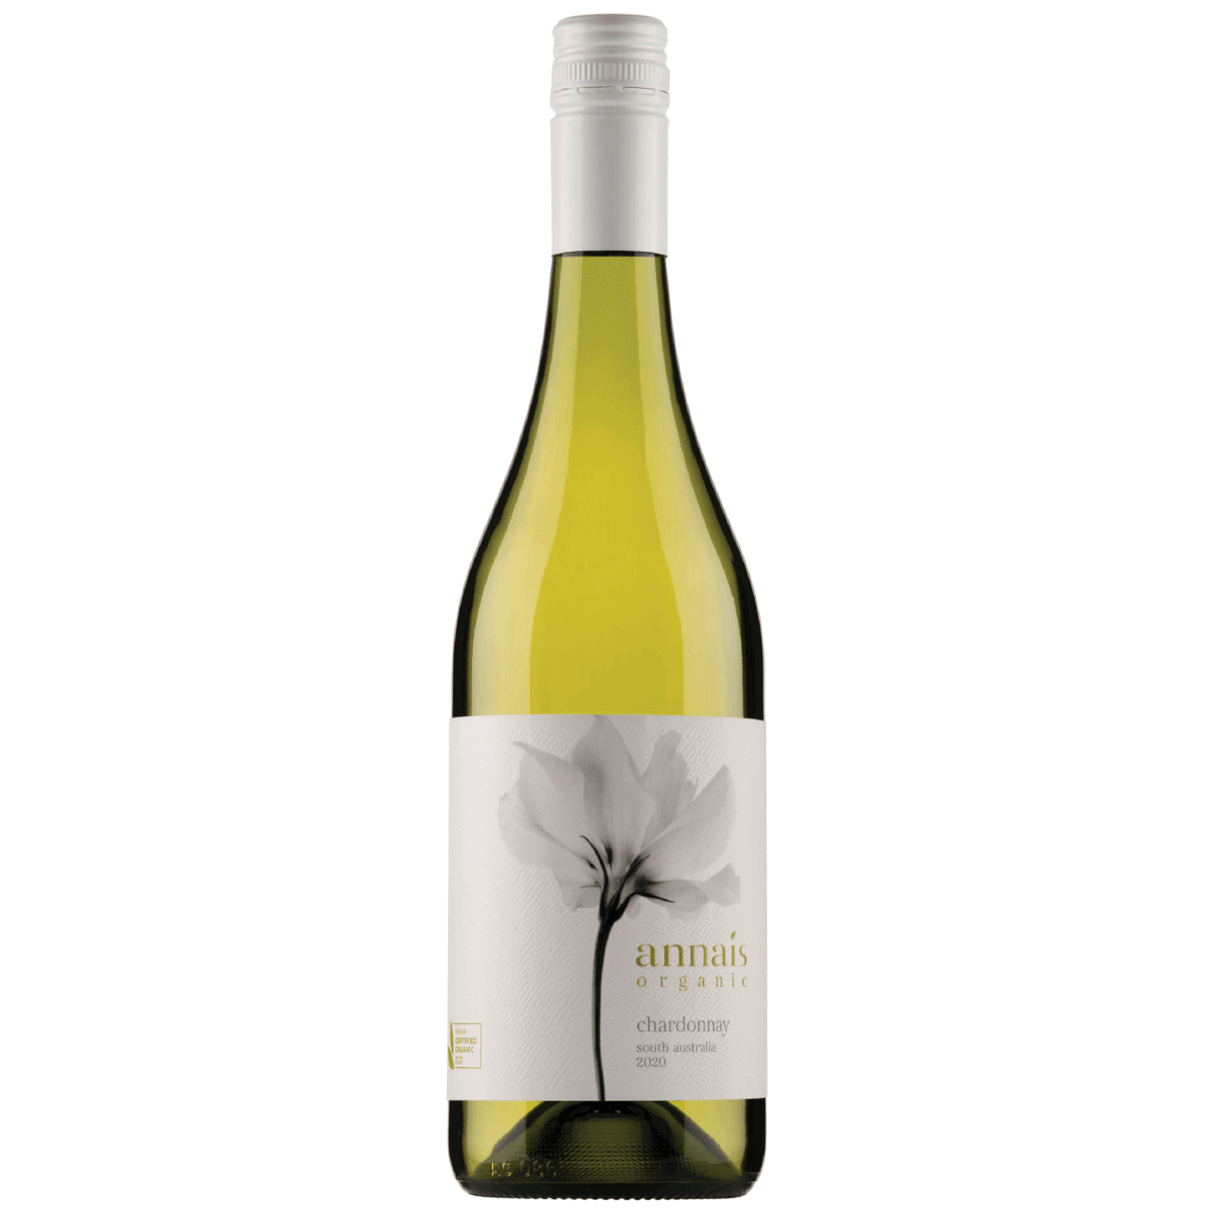 Annais Organic Chardonnay,  South Australia 2020 (12 bottles)